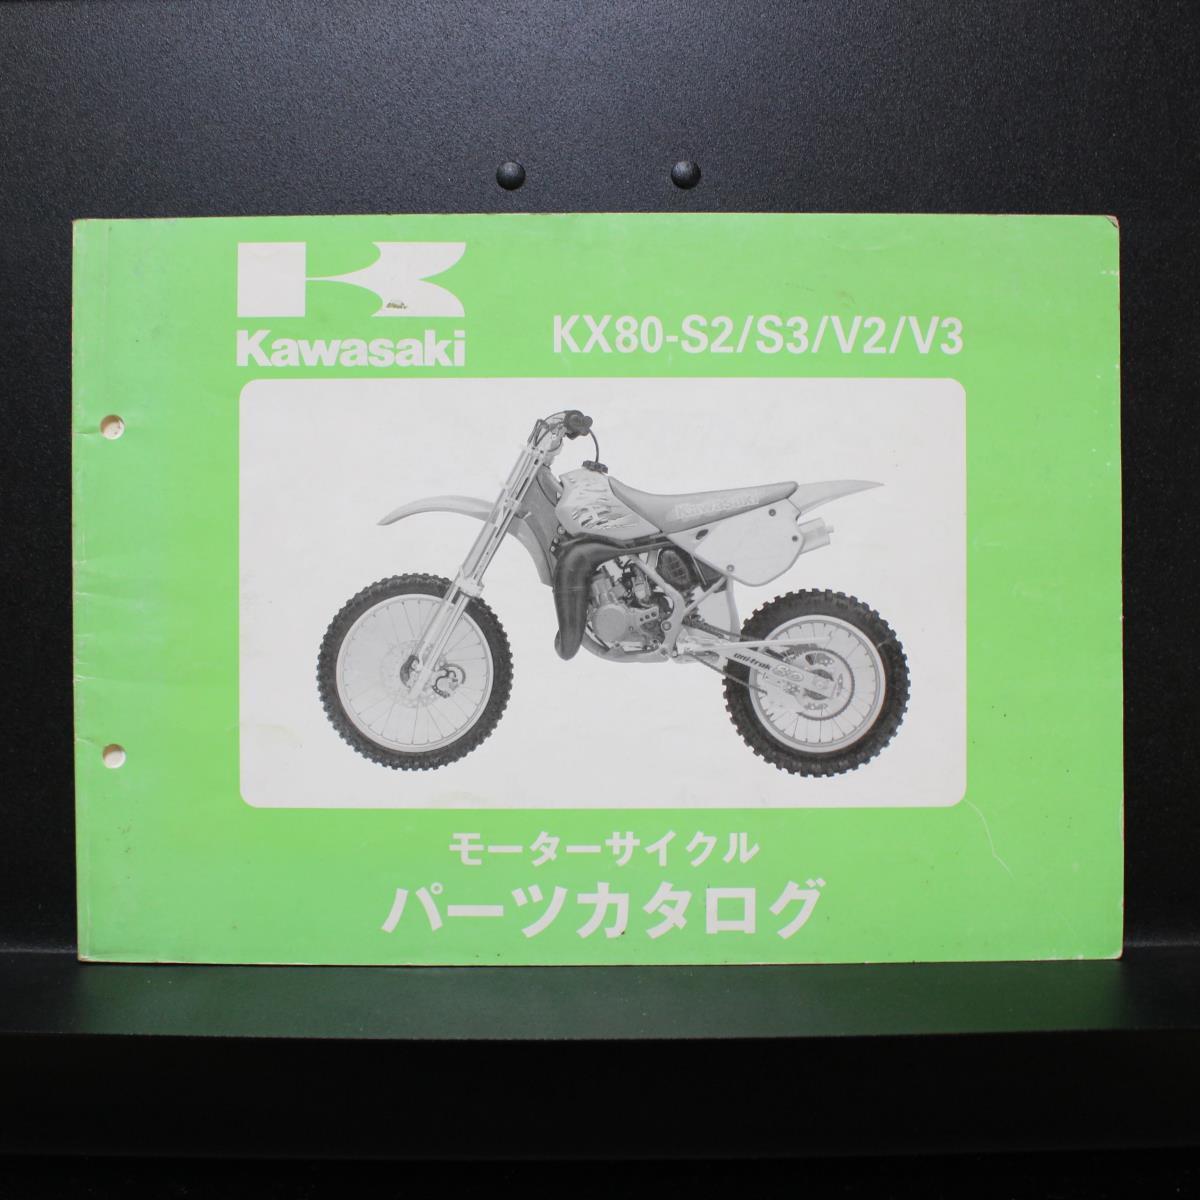 Kawasaki｜'92～'93 KX80-S2/S3/V2/V3｜モーターサイクル パーツカタログ｜1992年12月,平成4年12月発行｜99911-1212-02｜カワサキ｜210099の画像1